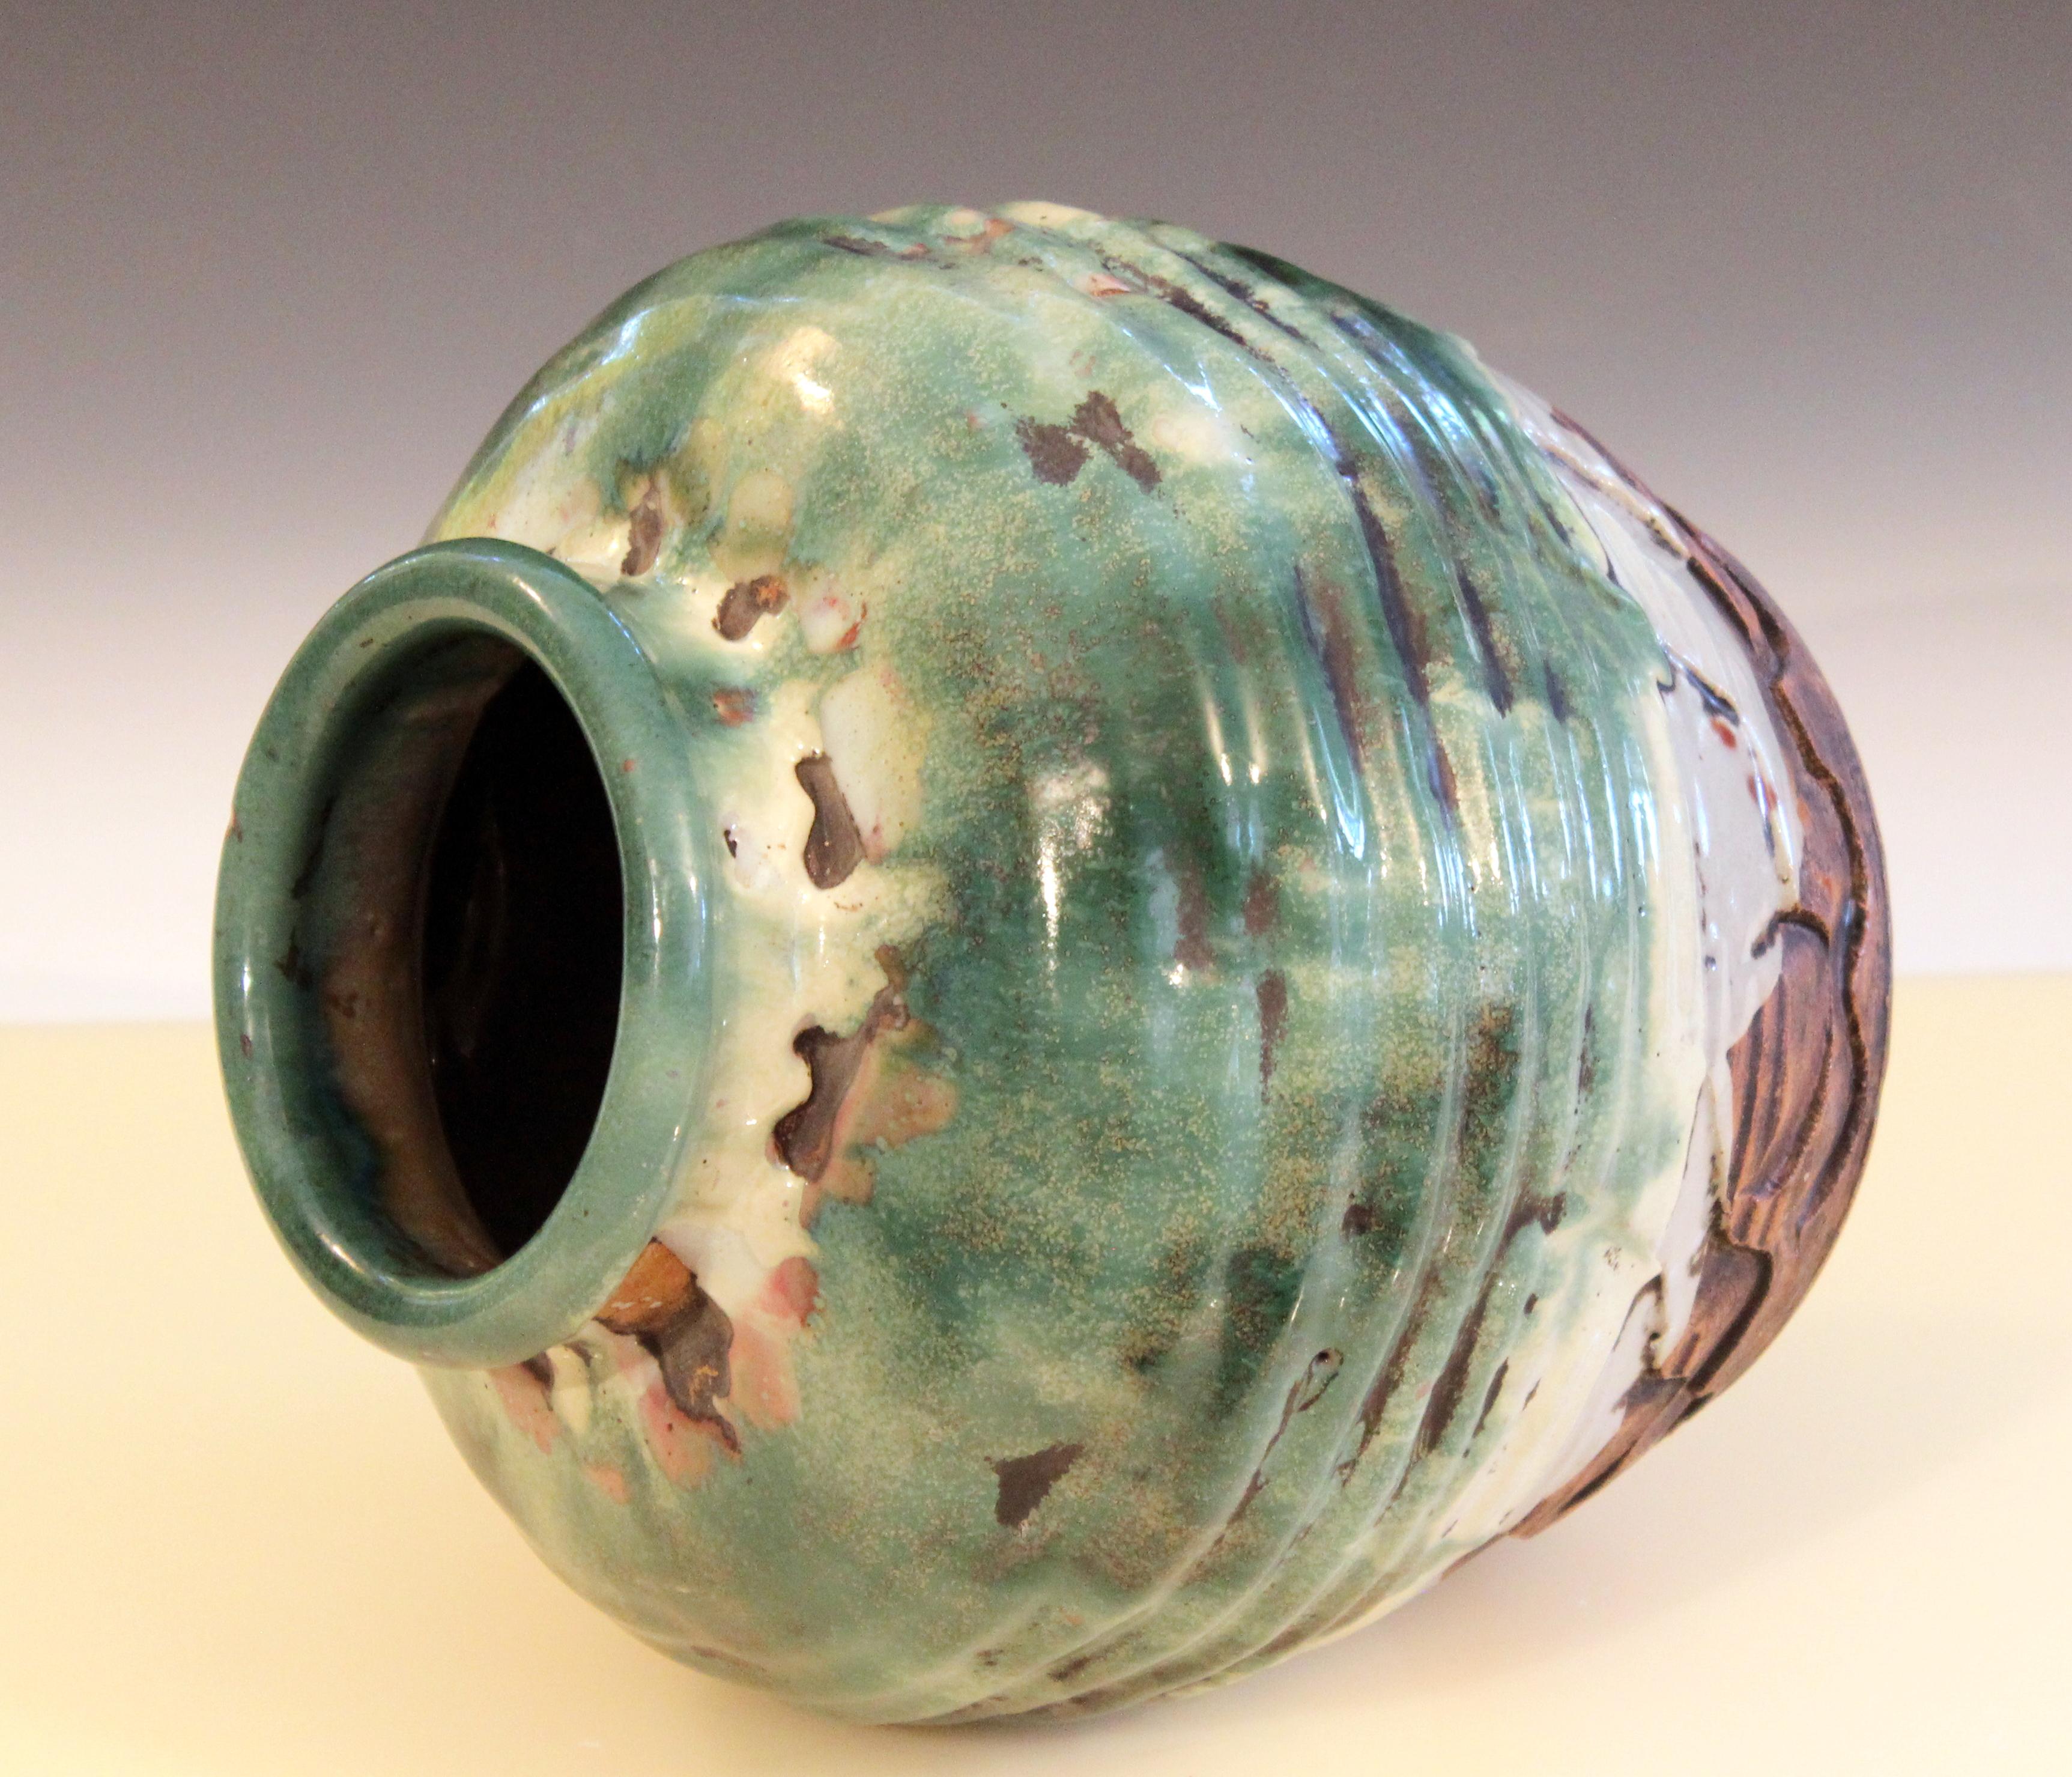 Japanese Awaji Pottery Manipulated Jar Heavy Drip Lava Glaze Wabi Sabi Tea Ceremony Vase For Sale